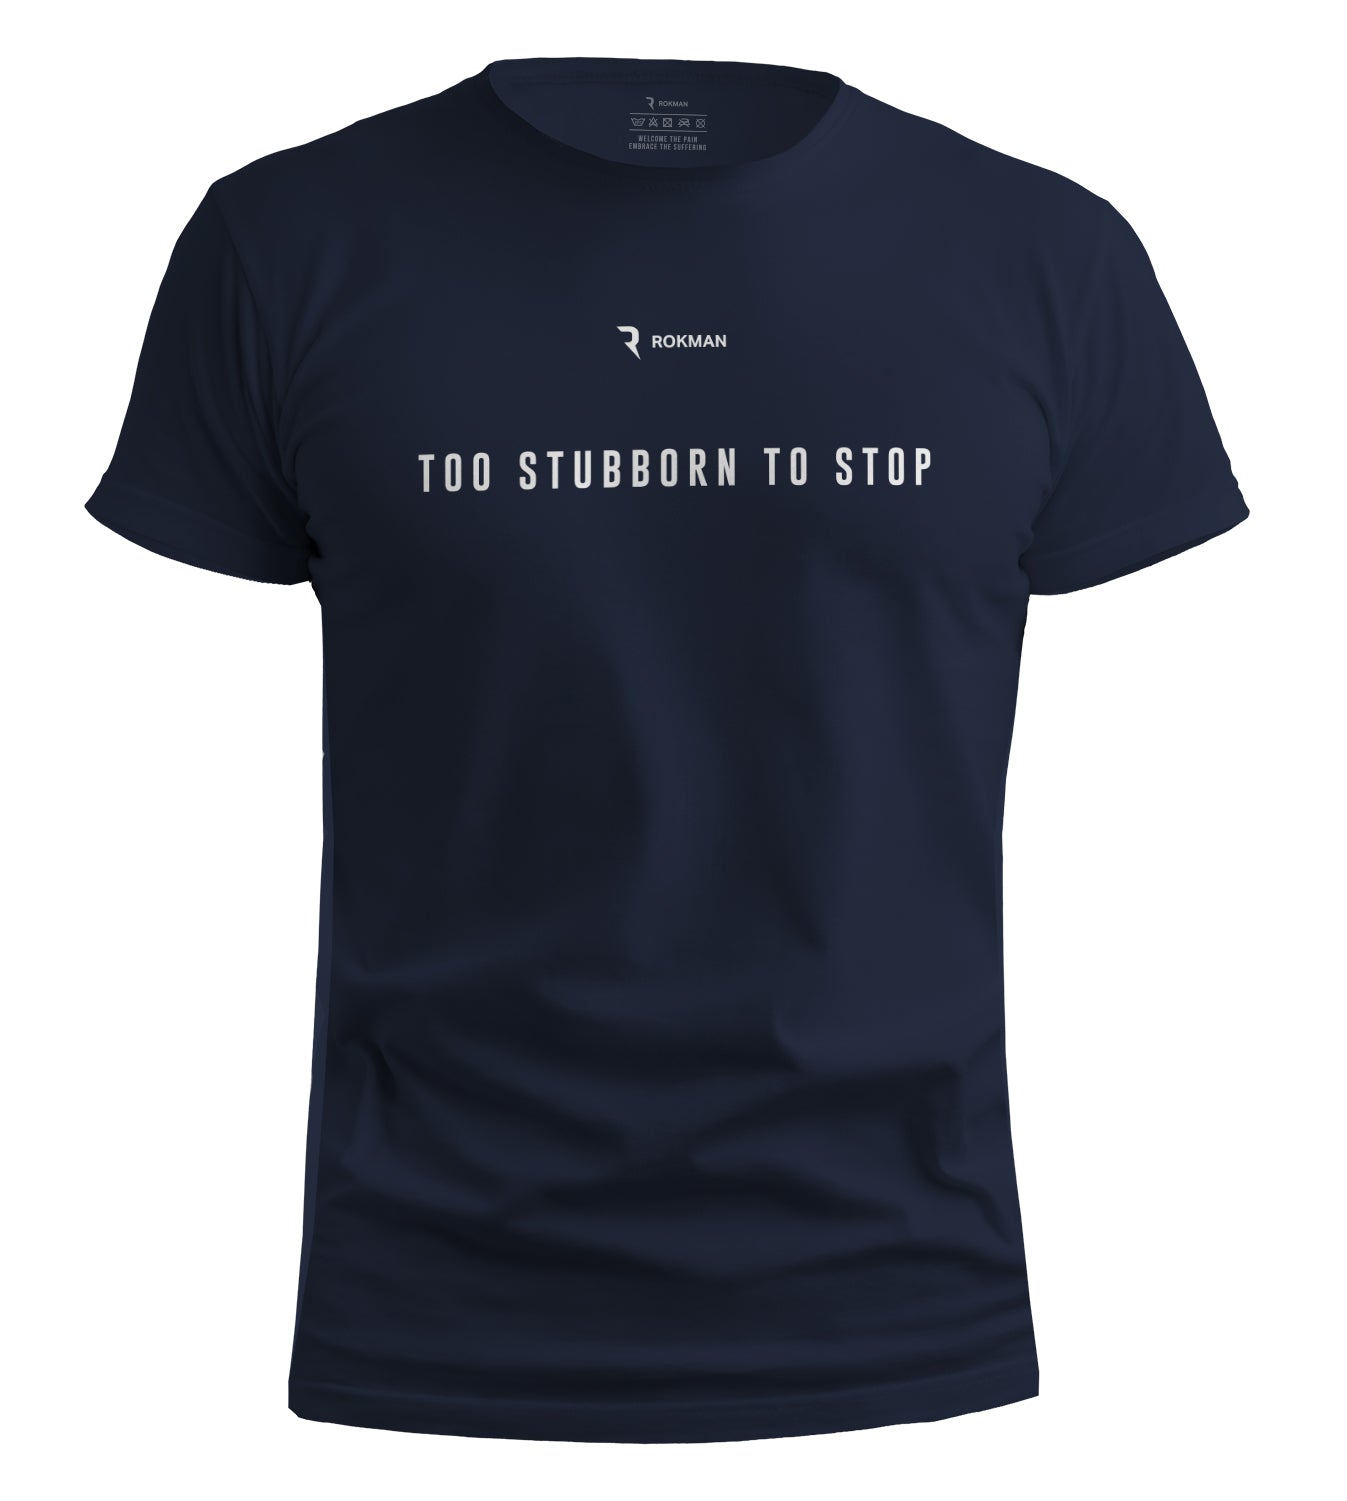 Mantra T-Shirt Men's Navy 